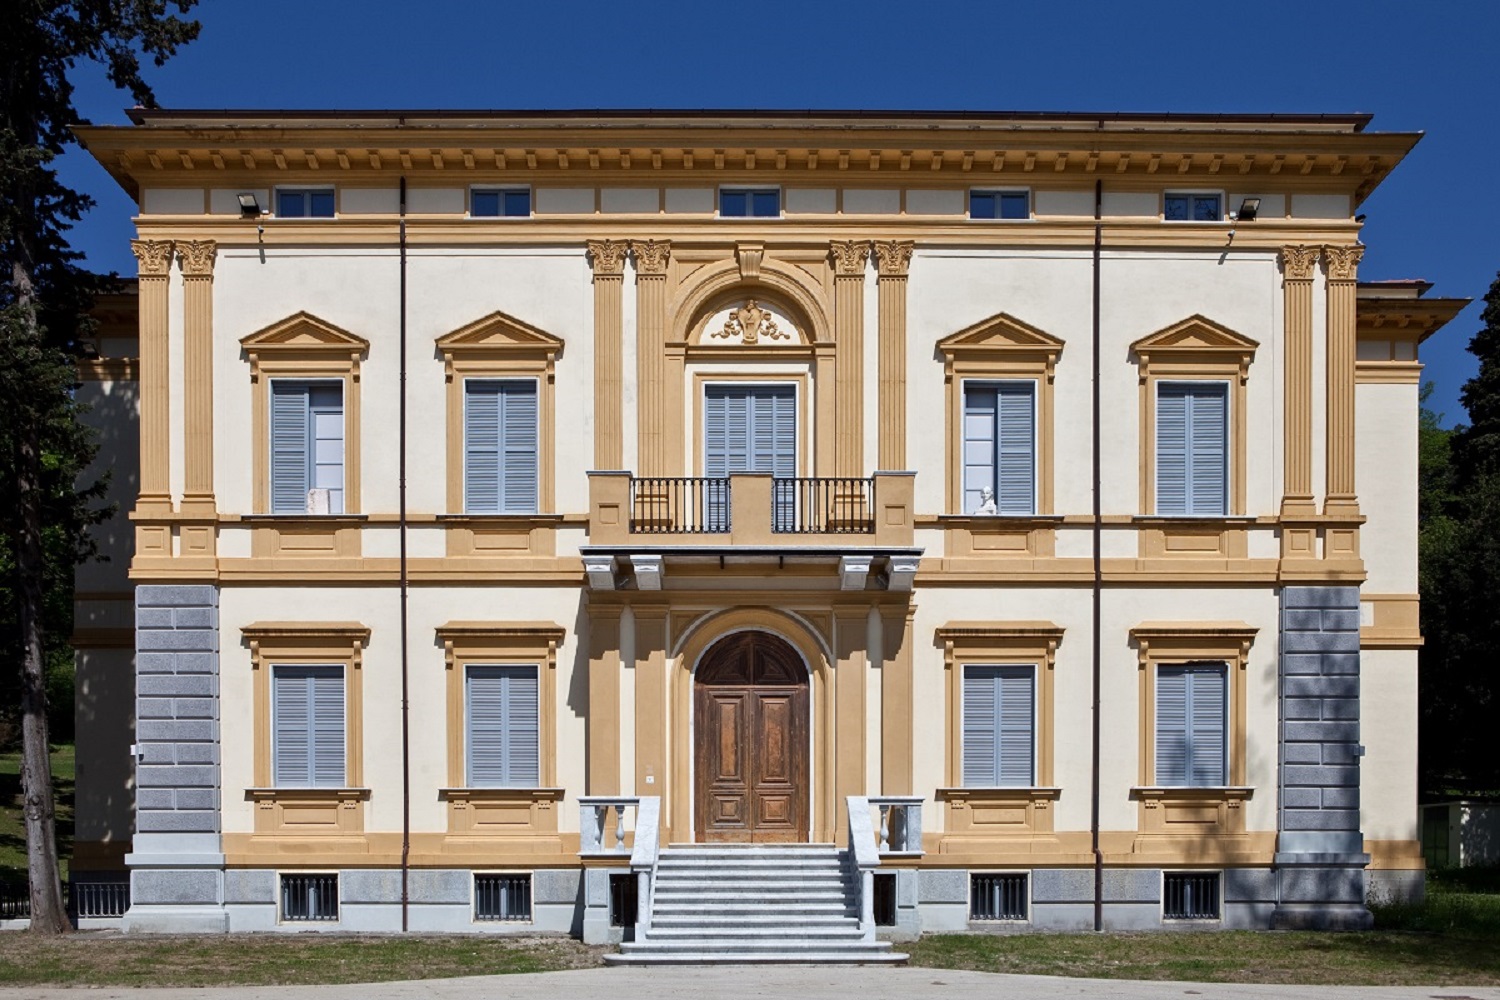 Villa Fabbricotti in Carrara